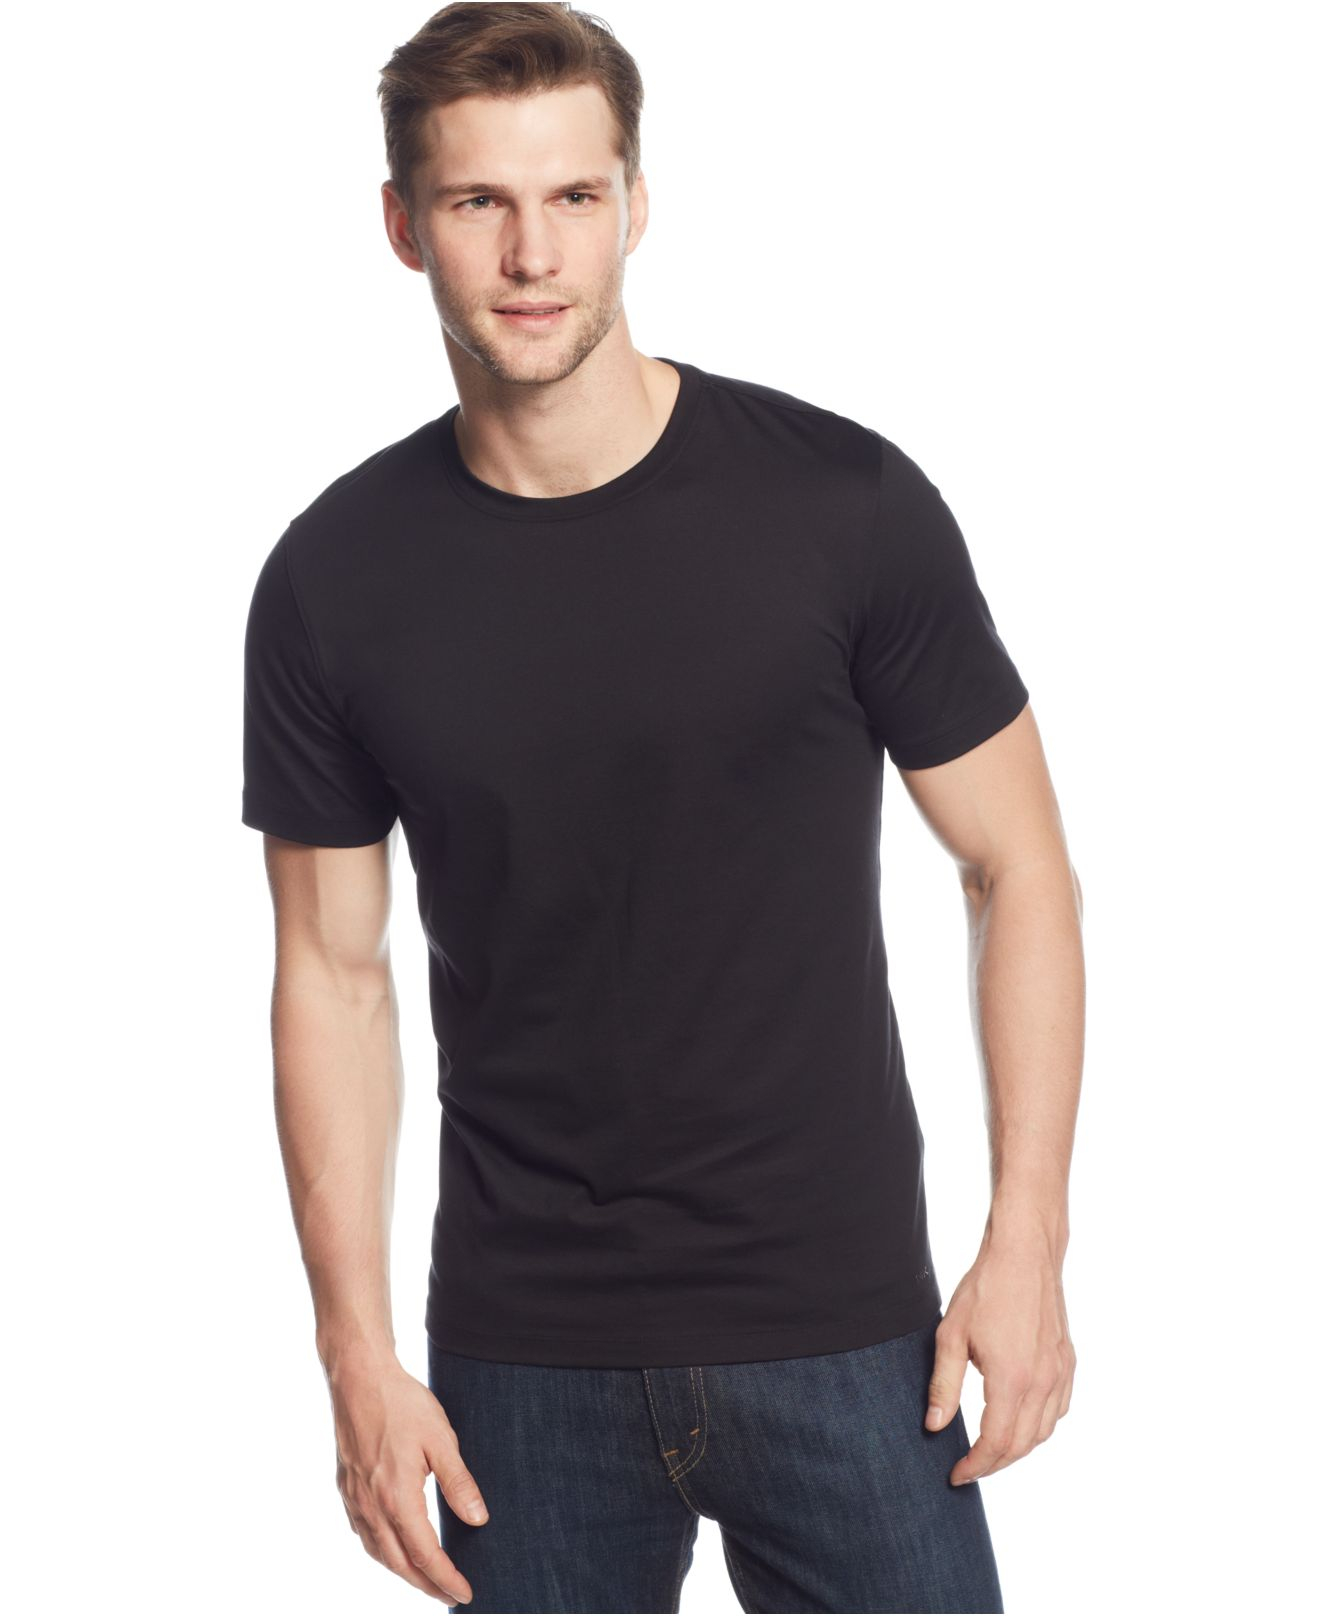 Lyst - Michael Kors Liquid Cotton Crew-Neck T-Shirt in Black for Men